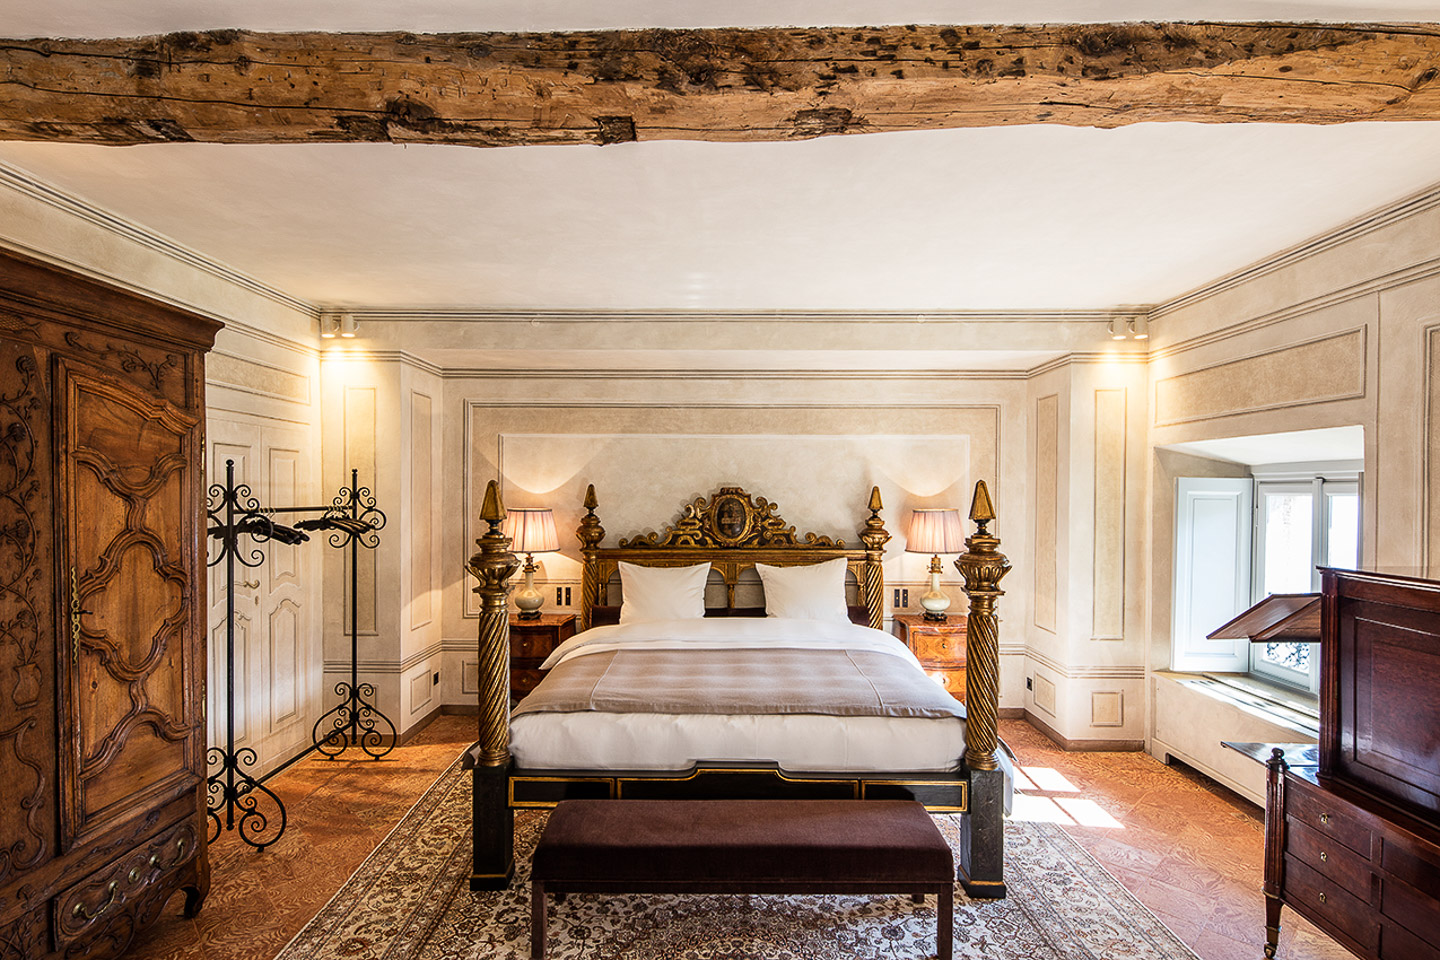 Villa-Balbiano-luxury-villa-property-Durini-17-century-Lake-Como-comfort-bed-suites-bedrooms-marble-bathrooms-originality-beauty-second-floo (1)